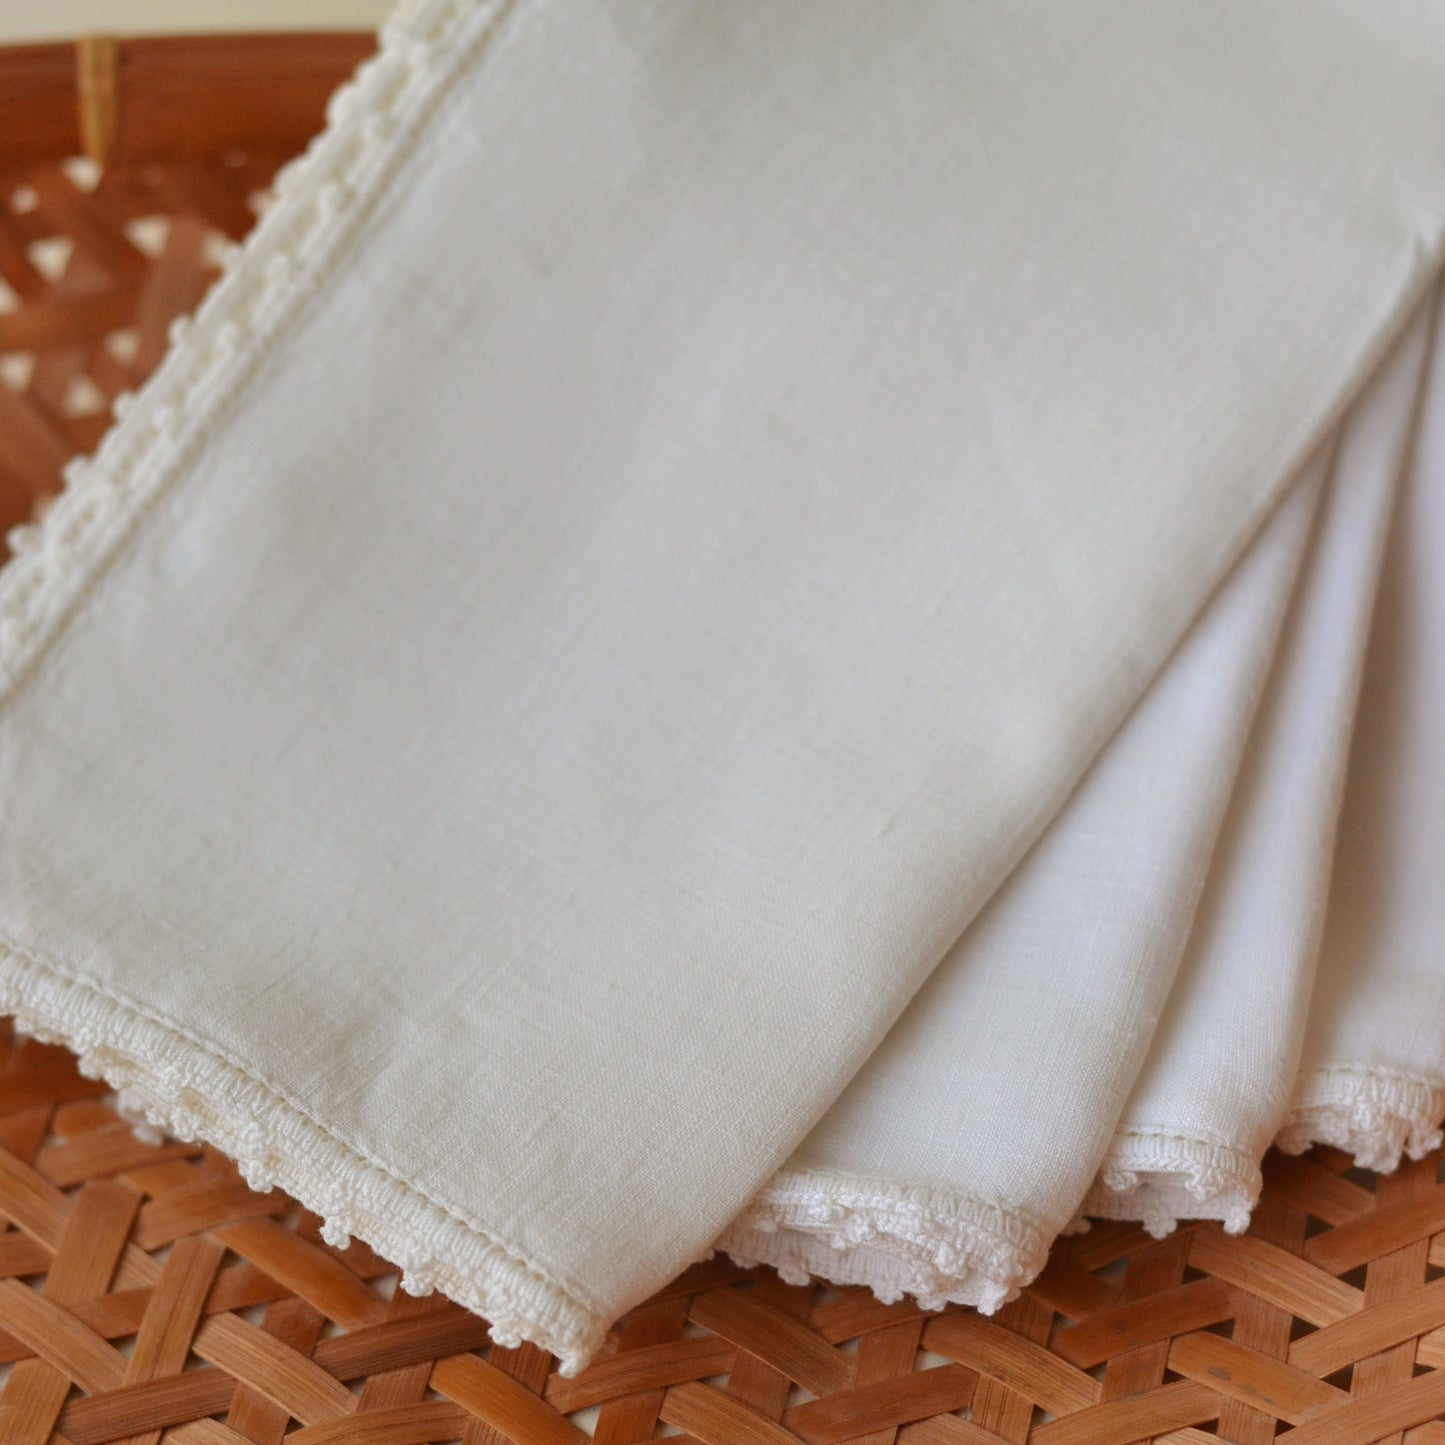 Lace Trimmed Cloth Napkins, Set of 5